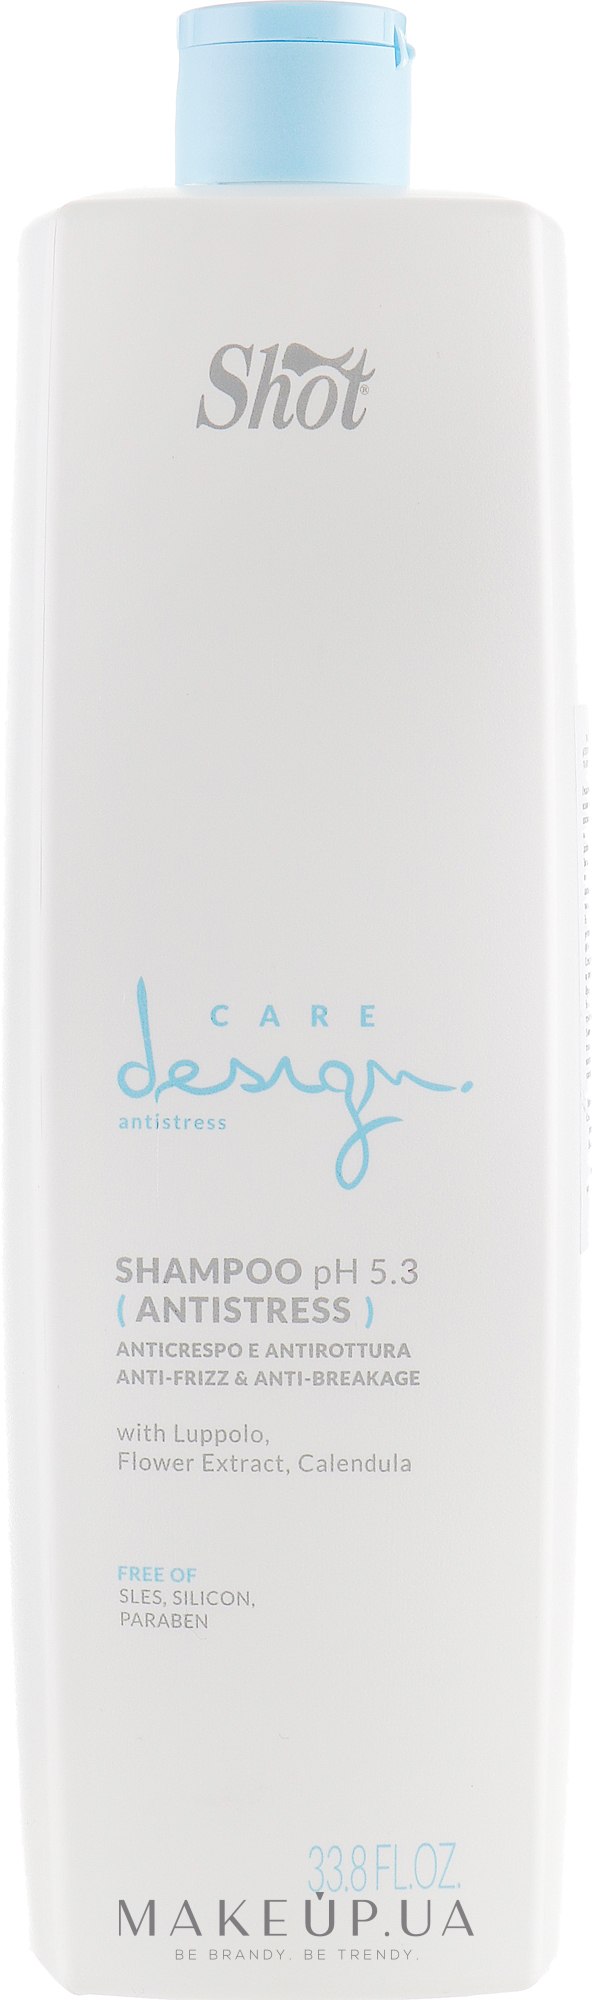 Шампунь антистресс против ломкости волос - Shot Care Design Antistress Shampoo — фото 1000ml